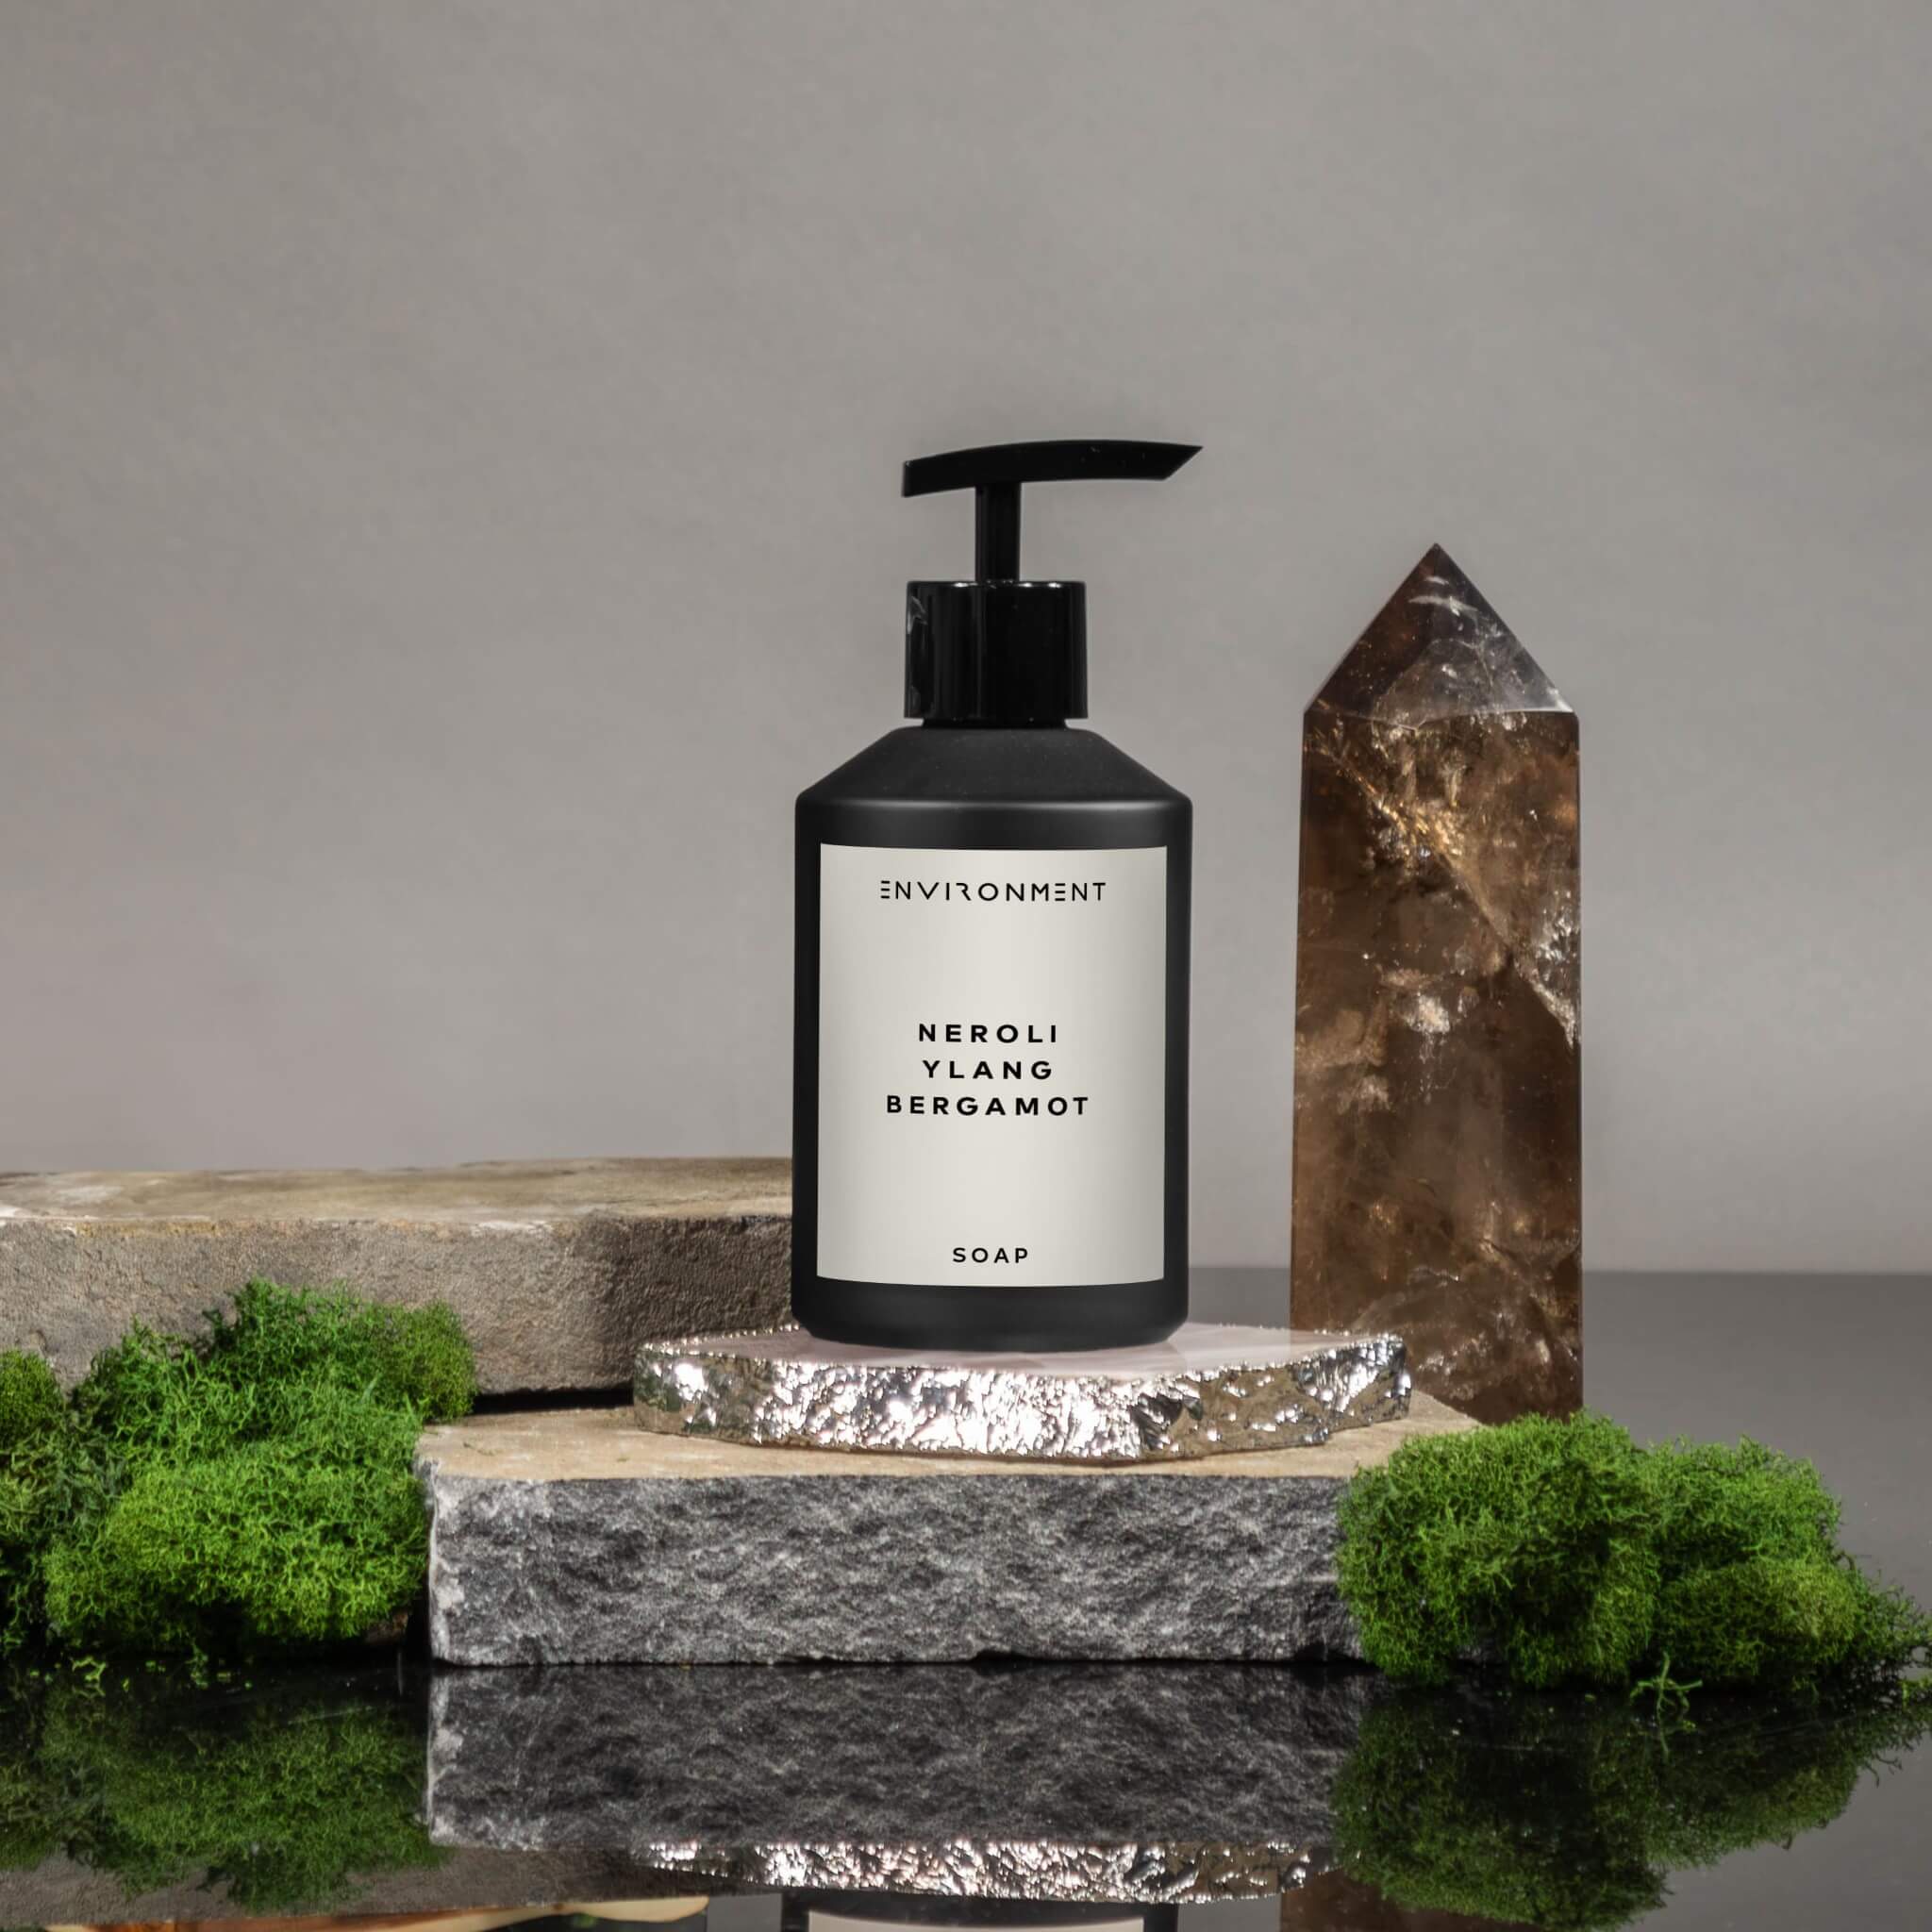 Neroli | Ylang | Bergamot Hand Soap (Inspired by Chanel Chanel #5®)